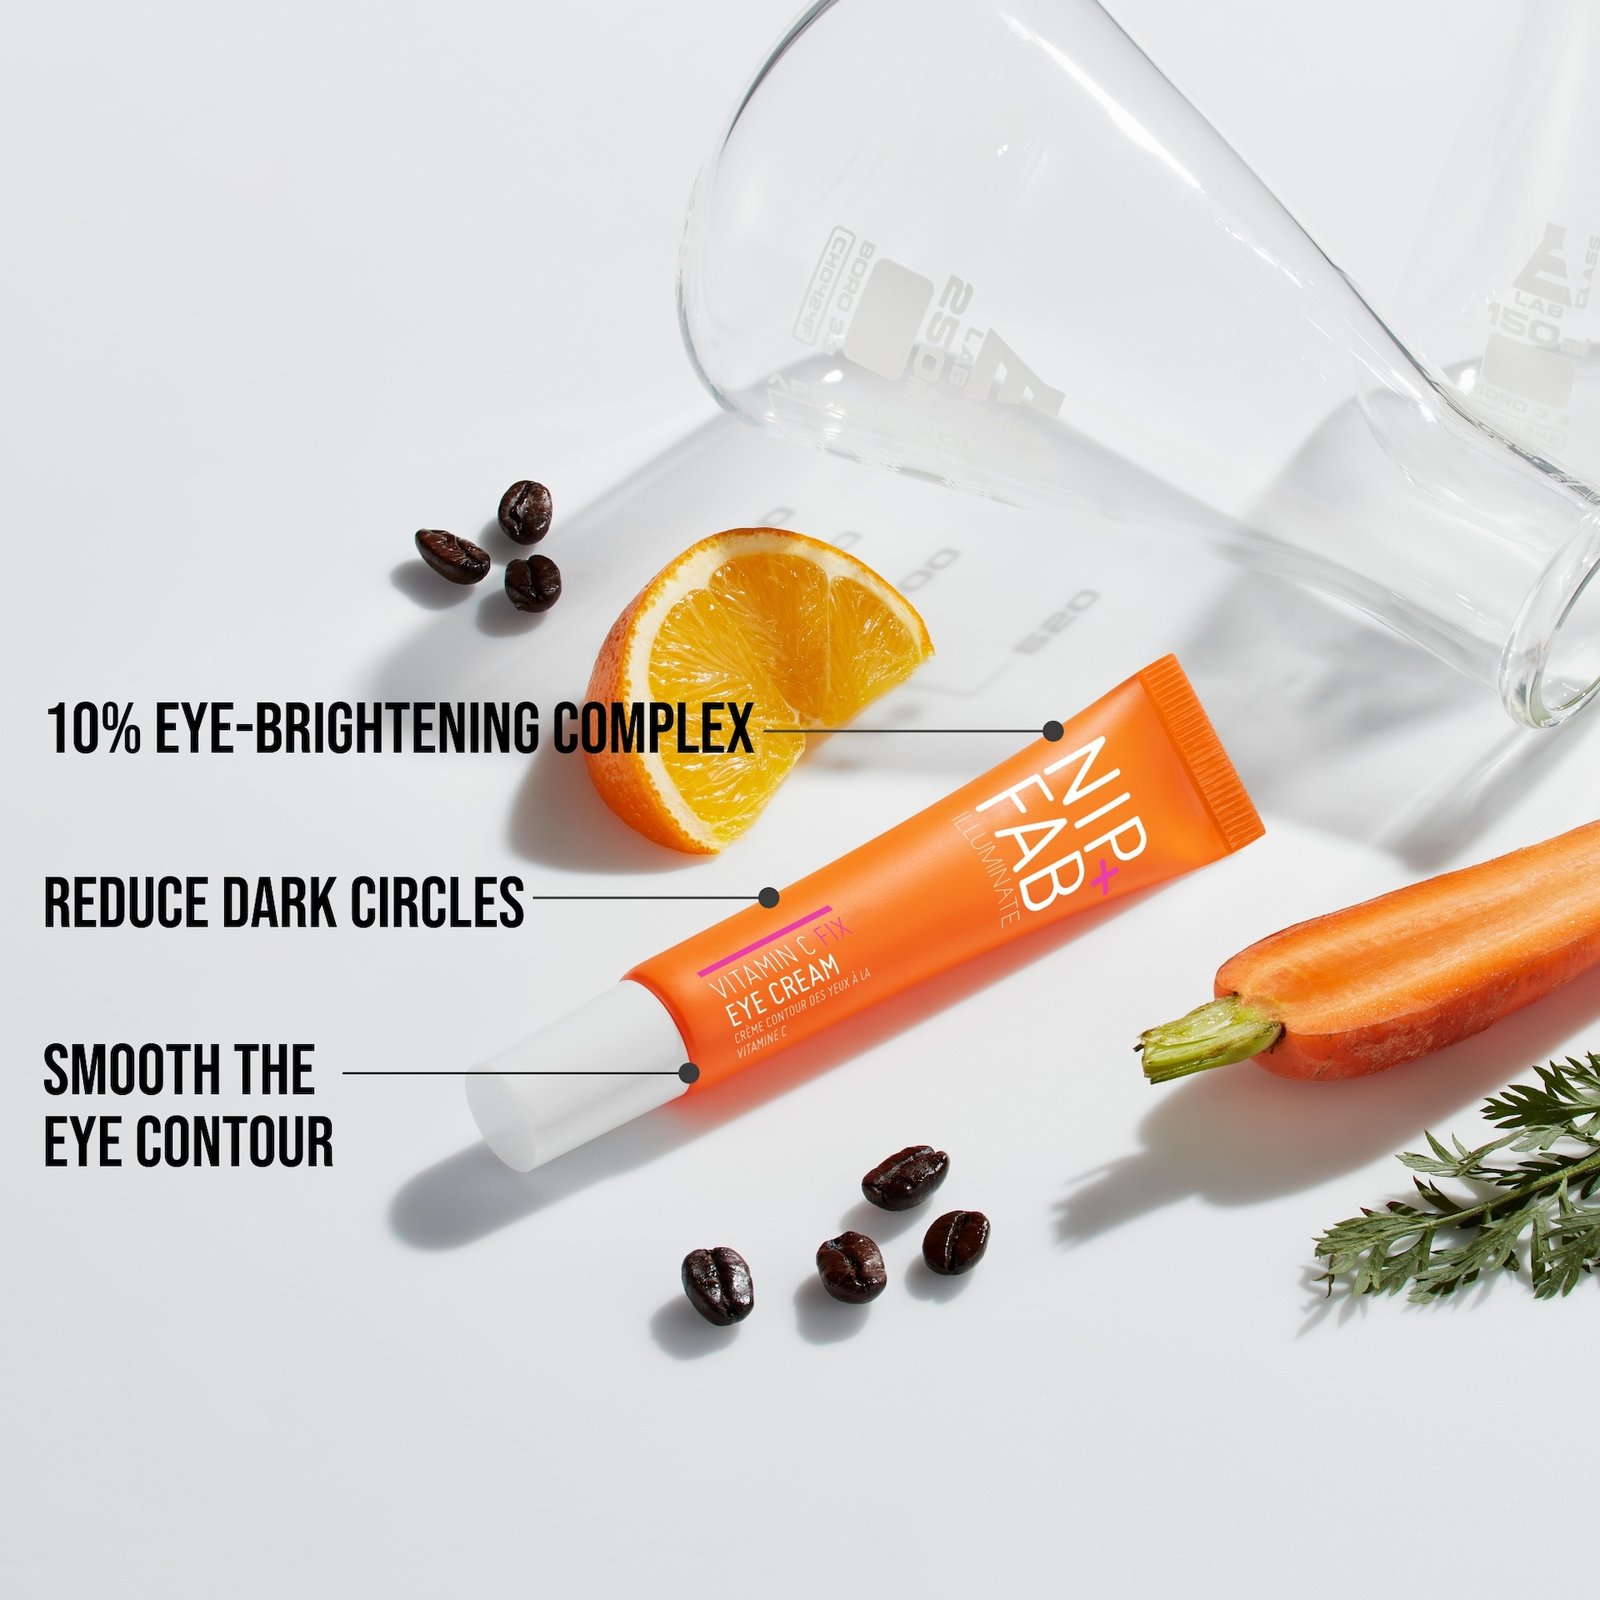 NIP+FAB Vitamin C 10% Fix Eye Cream 15 ml